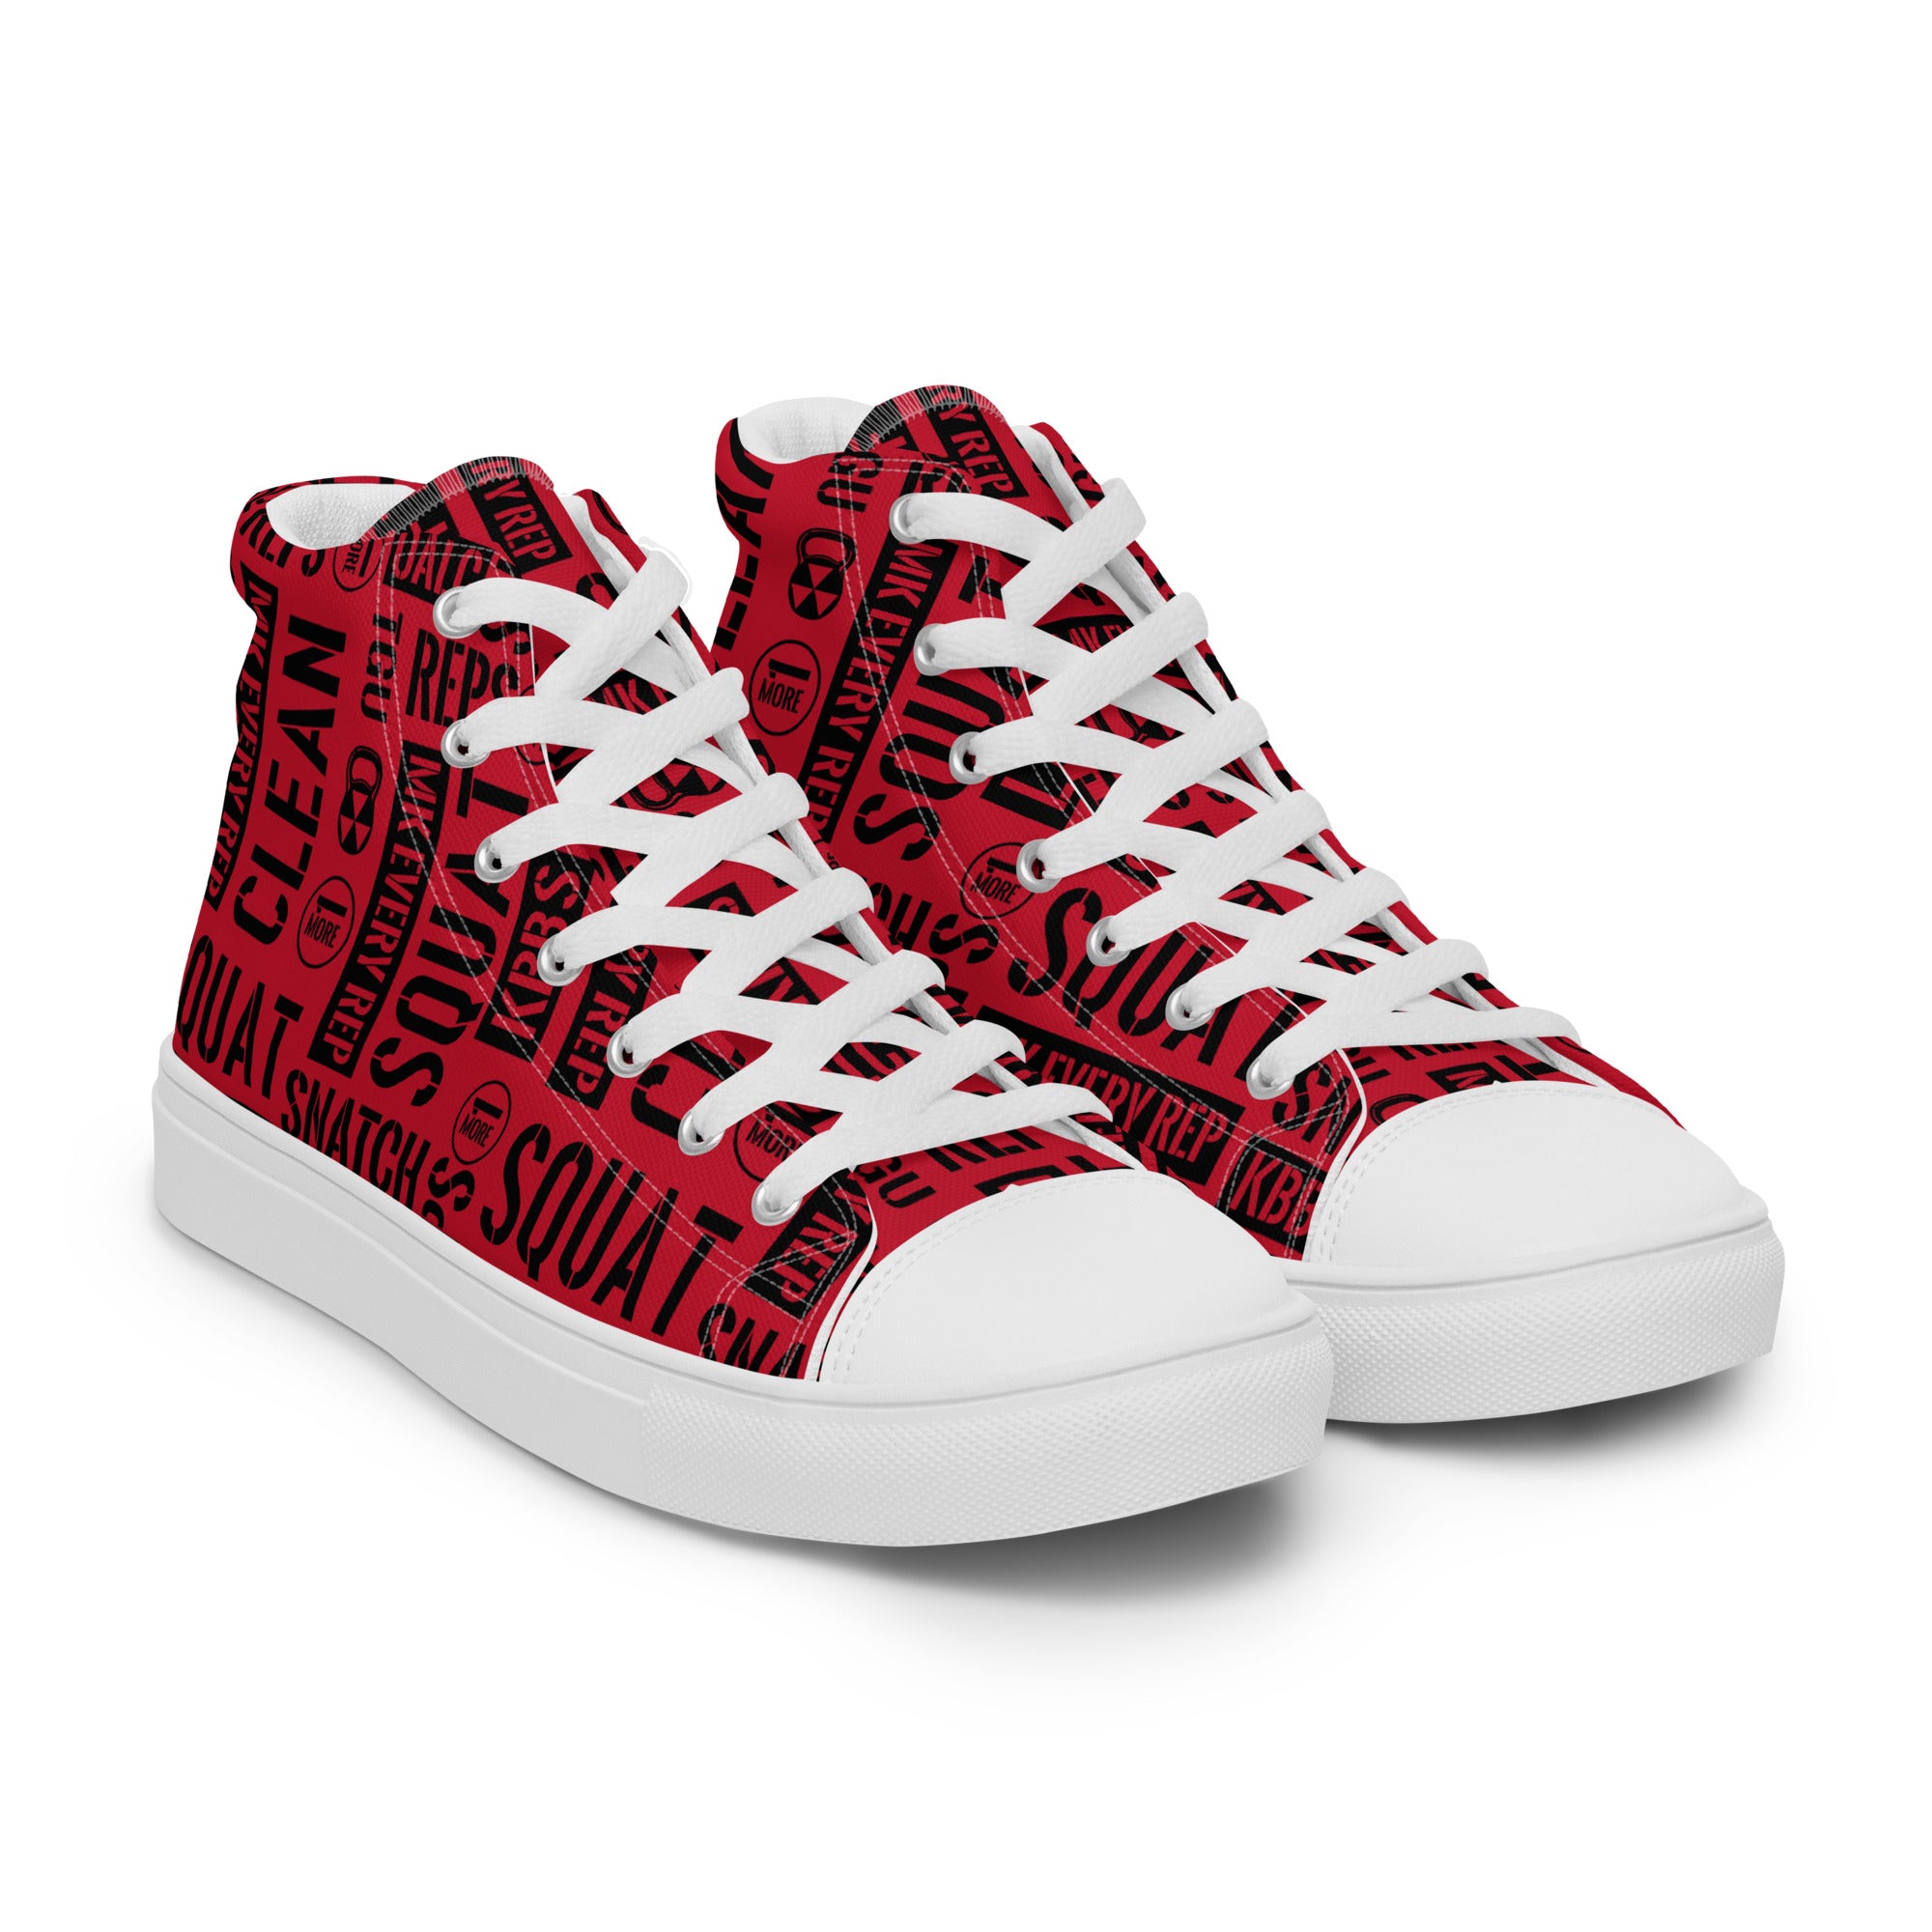 Men’s Crimson Acronyms high top White canvas shoes